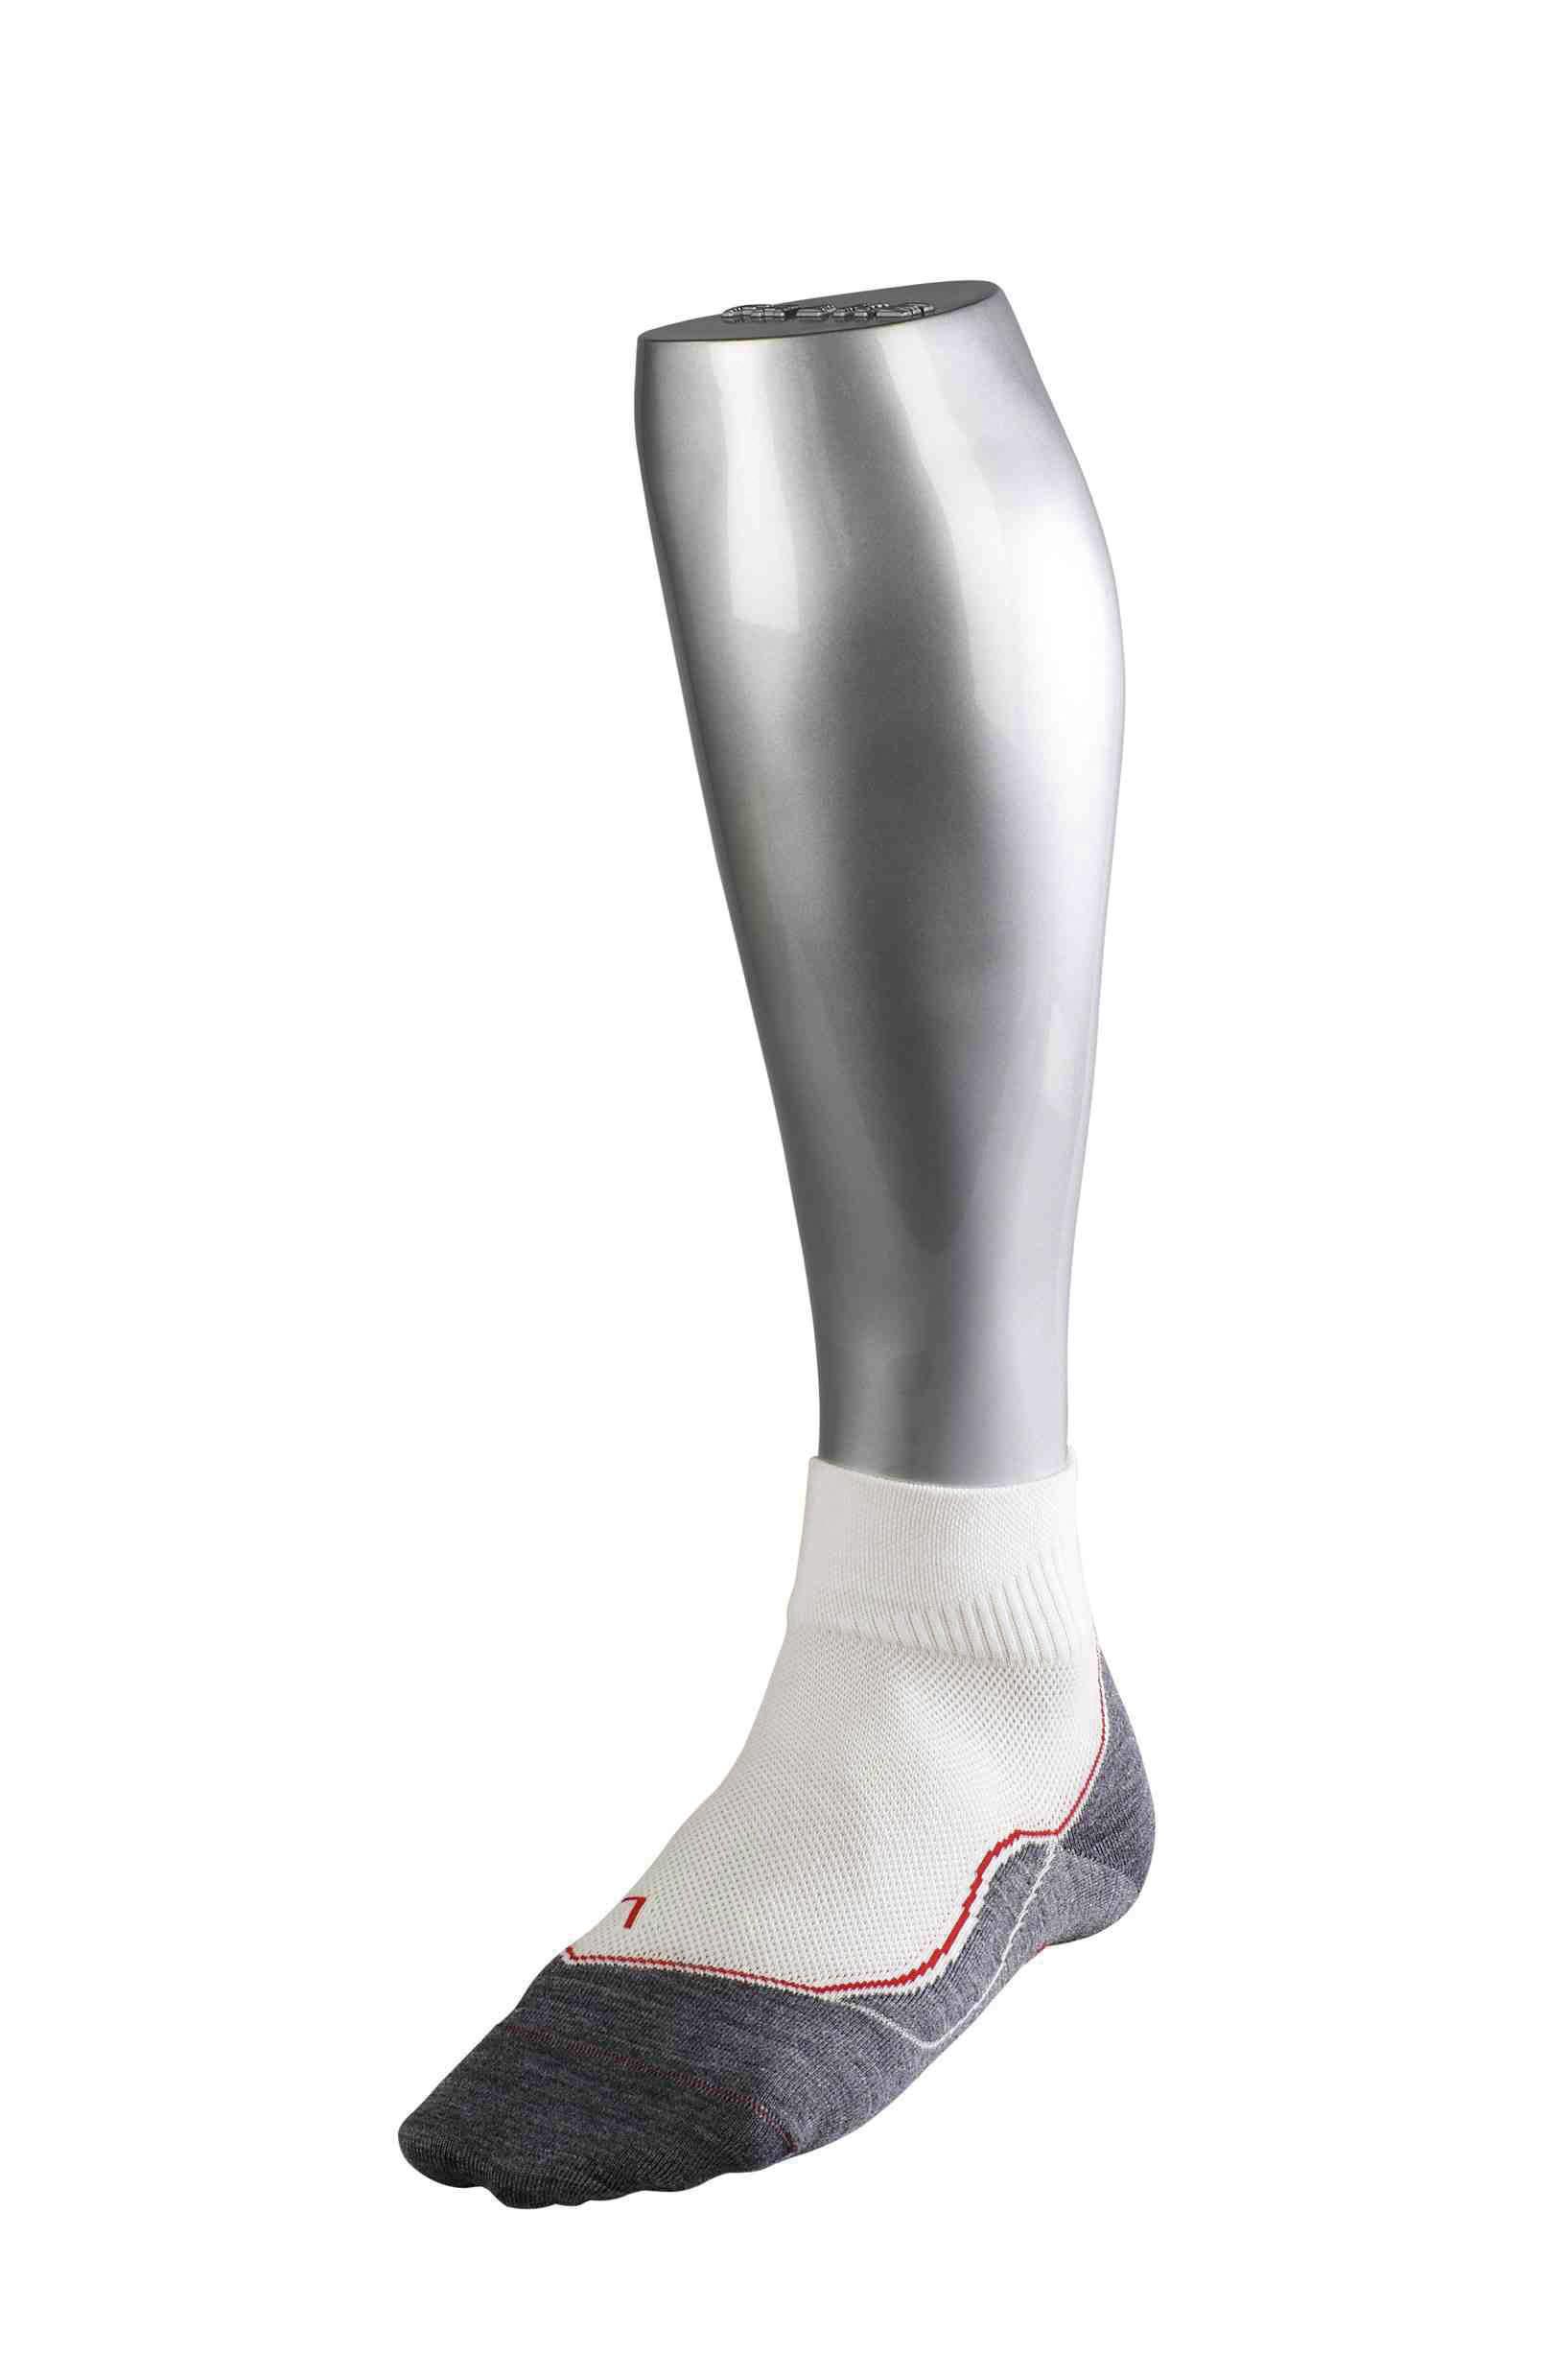 Foto Calcetines para correr Falke RU5 gris/blanco para mujer , 37-38